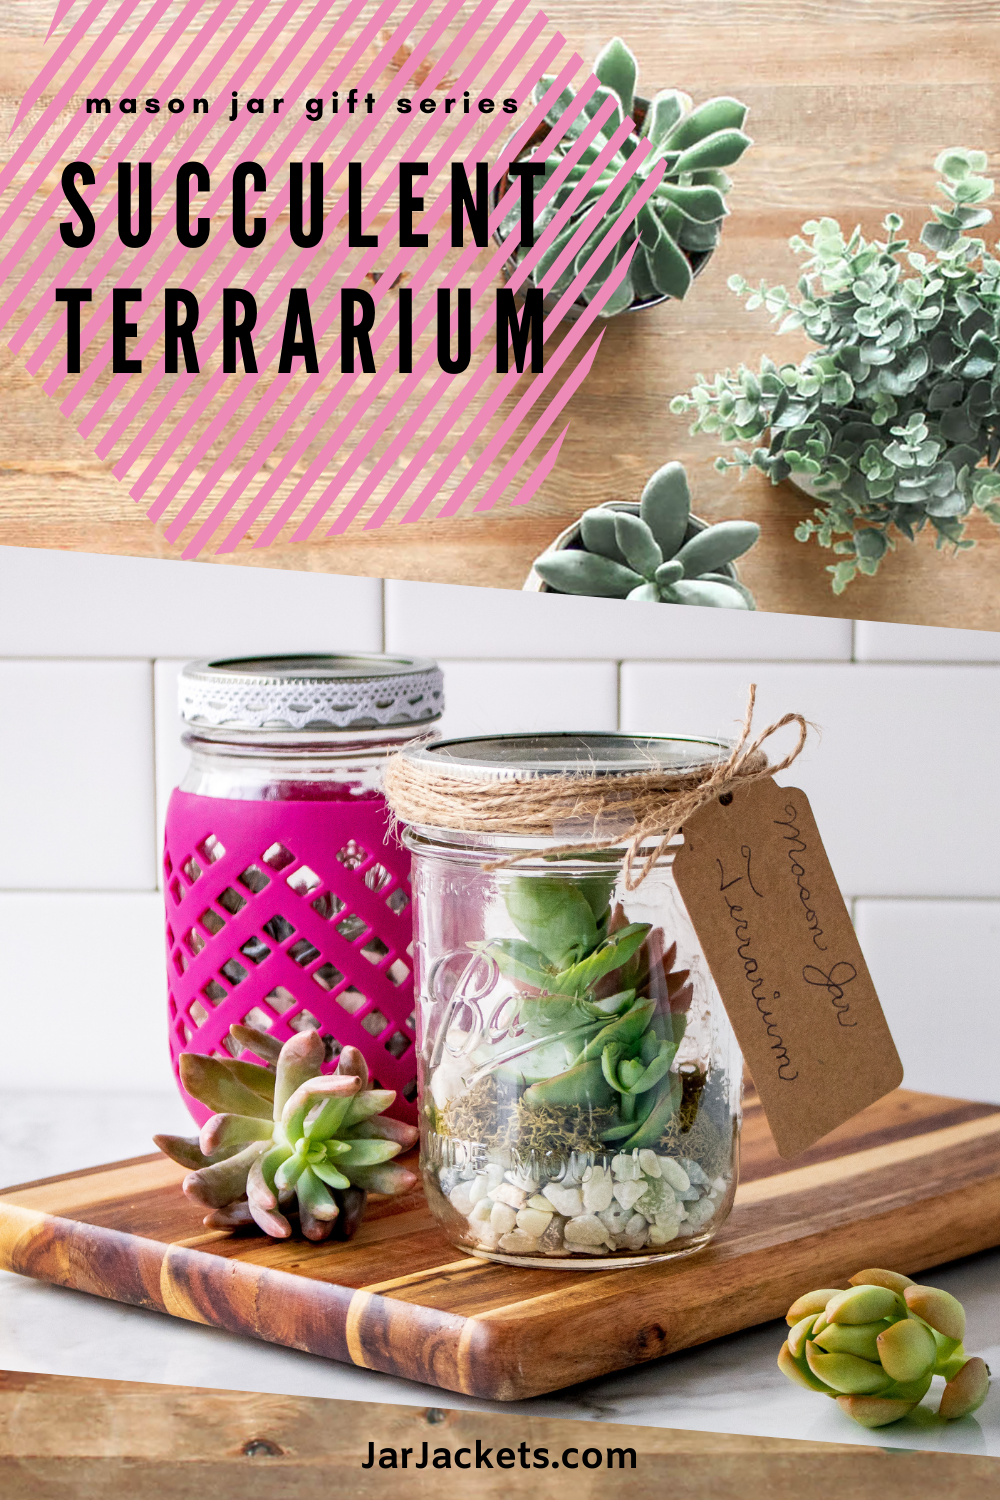 How To Succulent Terrarium in a Mason Jar